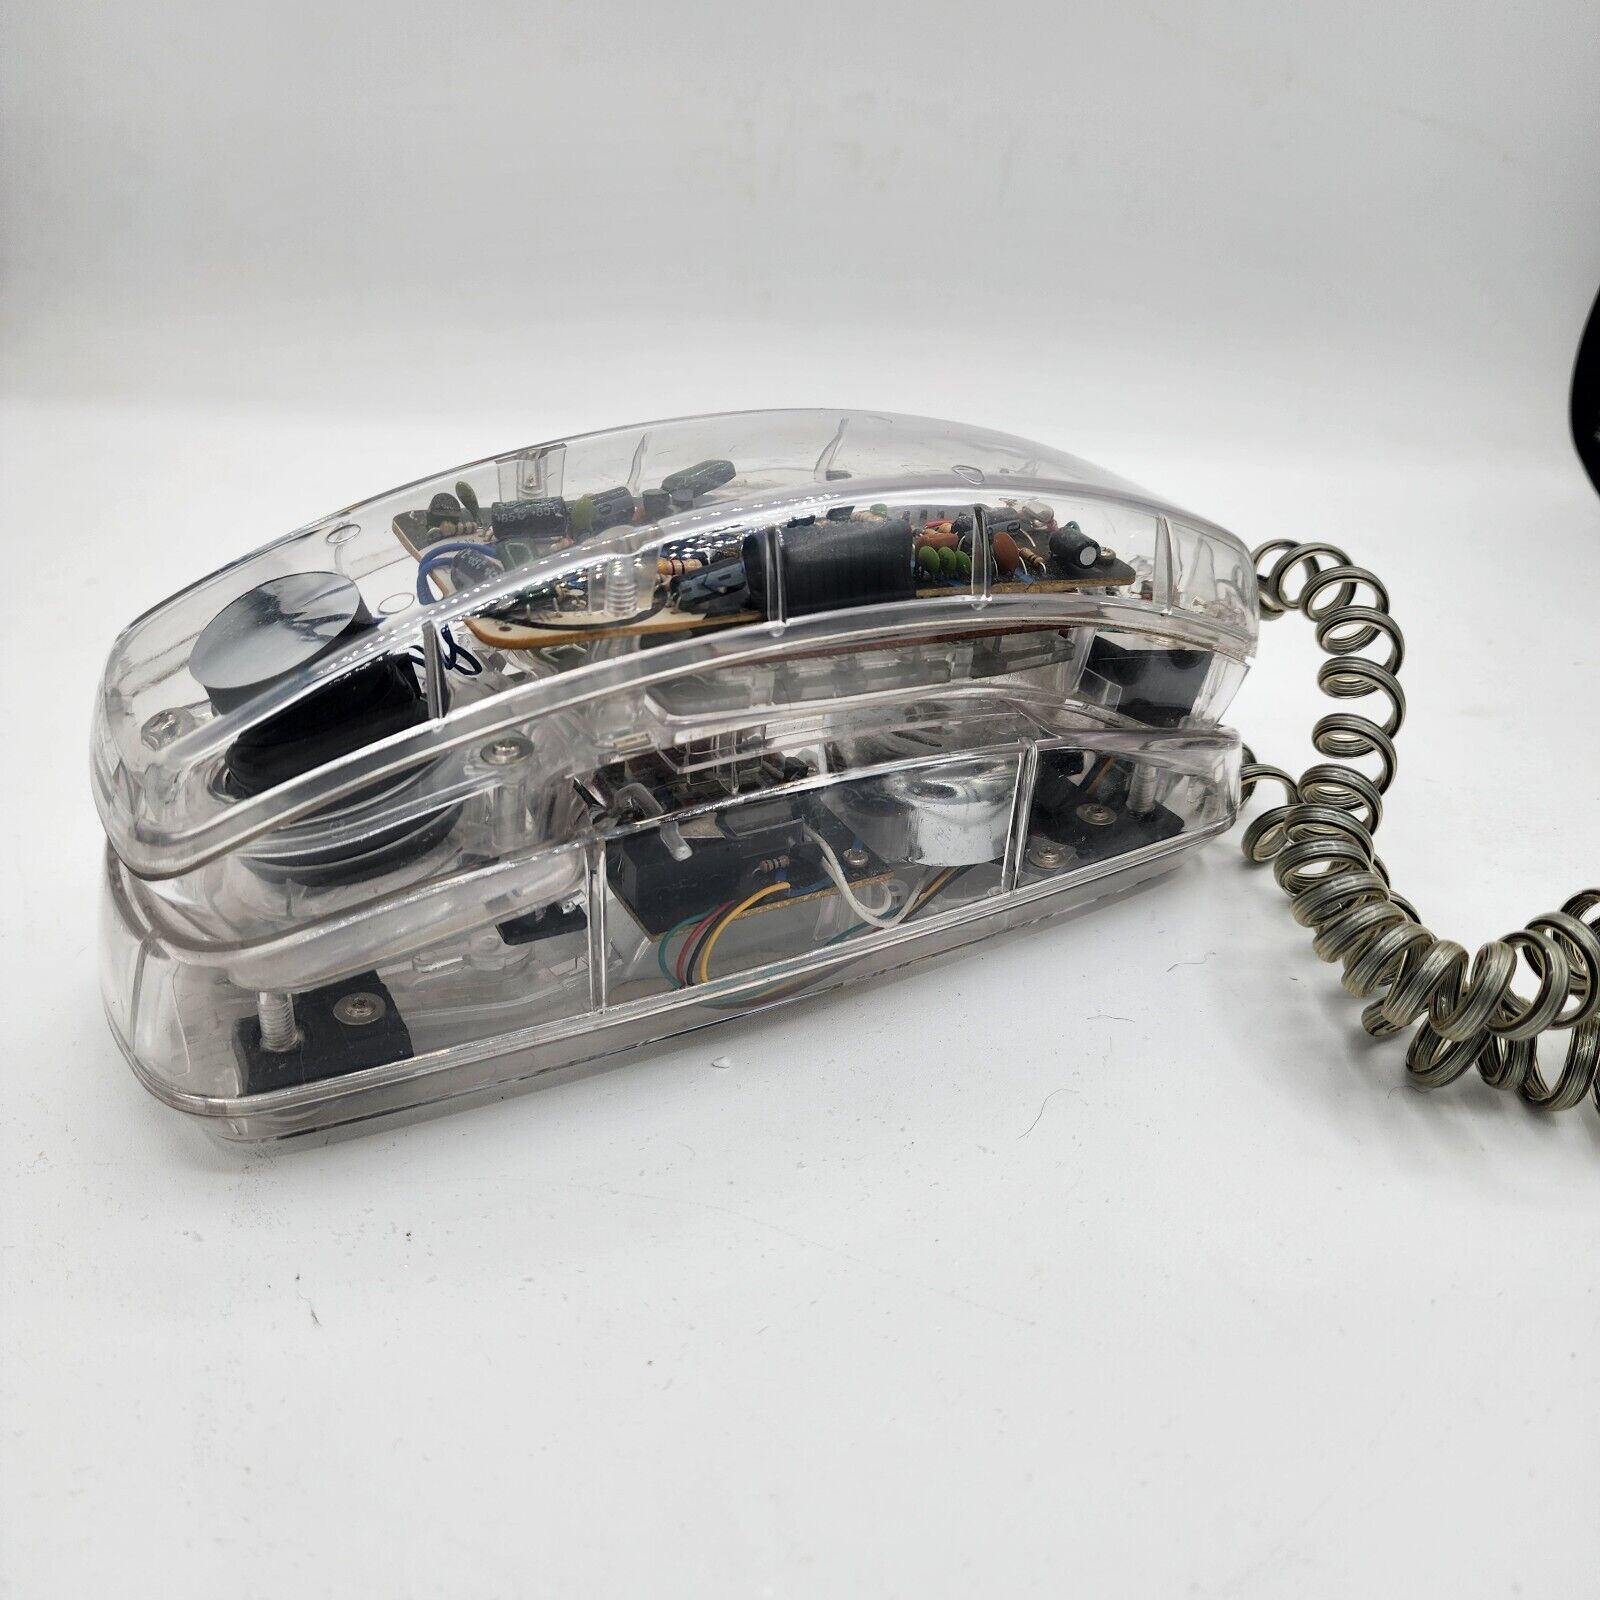 Vintage Clear Conair Transparent Push Button Telephone Lights Up SW205 Phone